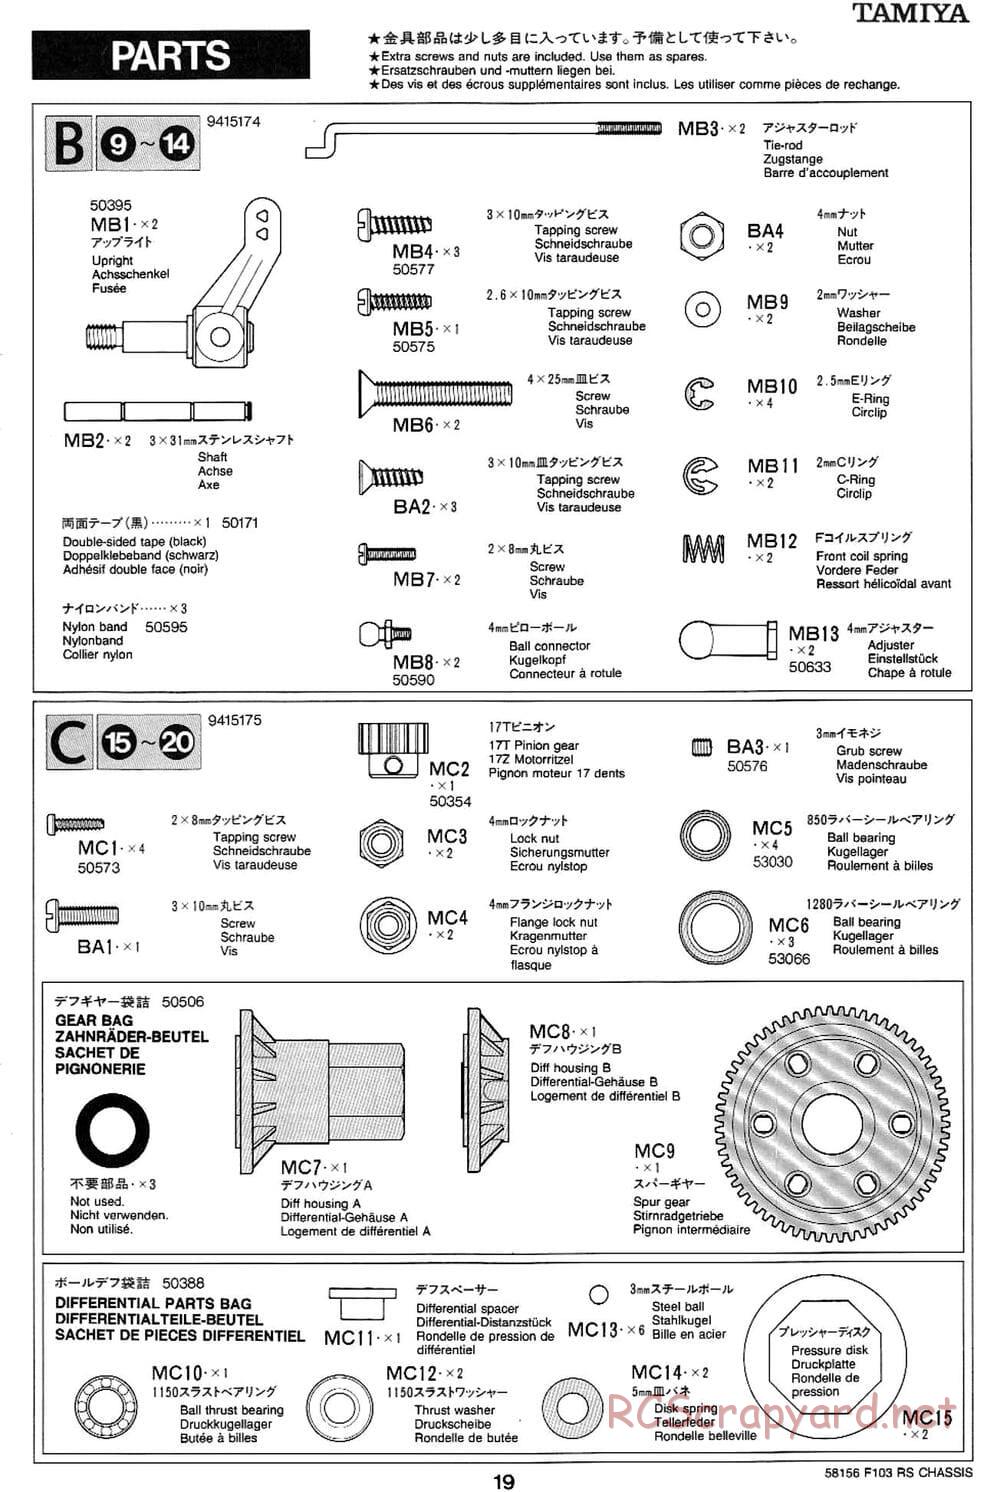 Tamiya - F103RS Chassis - Manual - Page 19